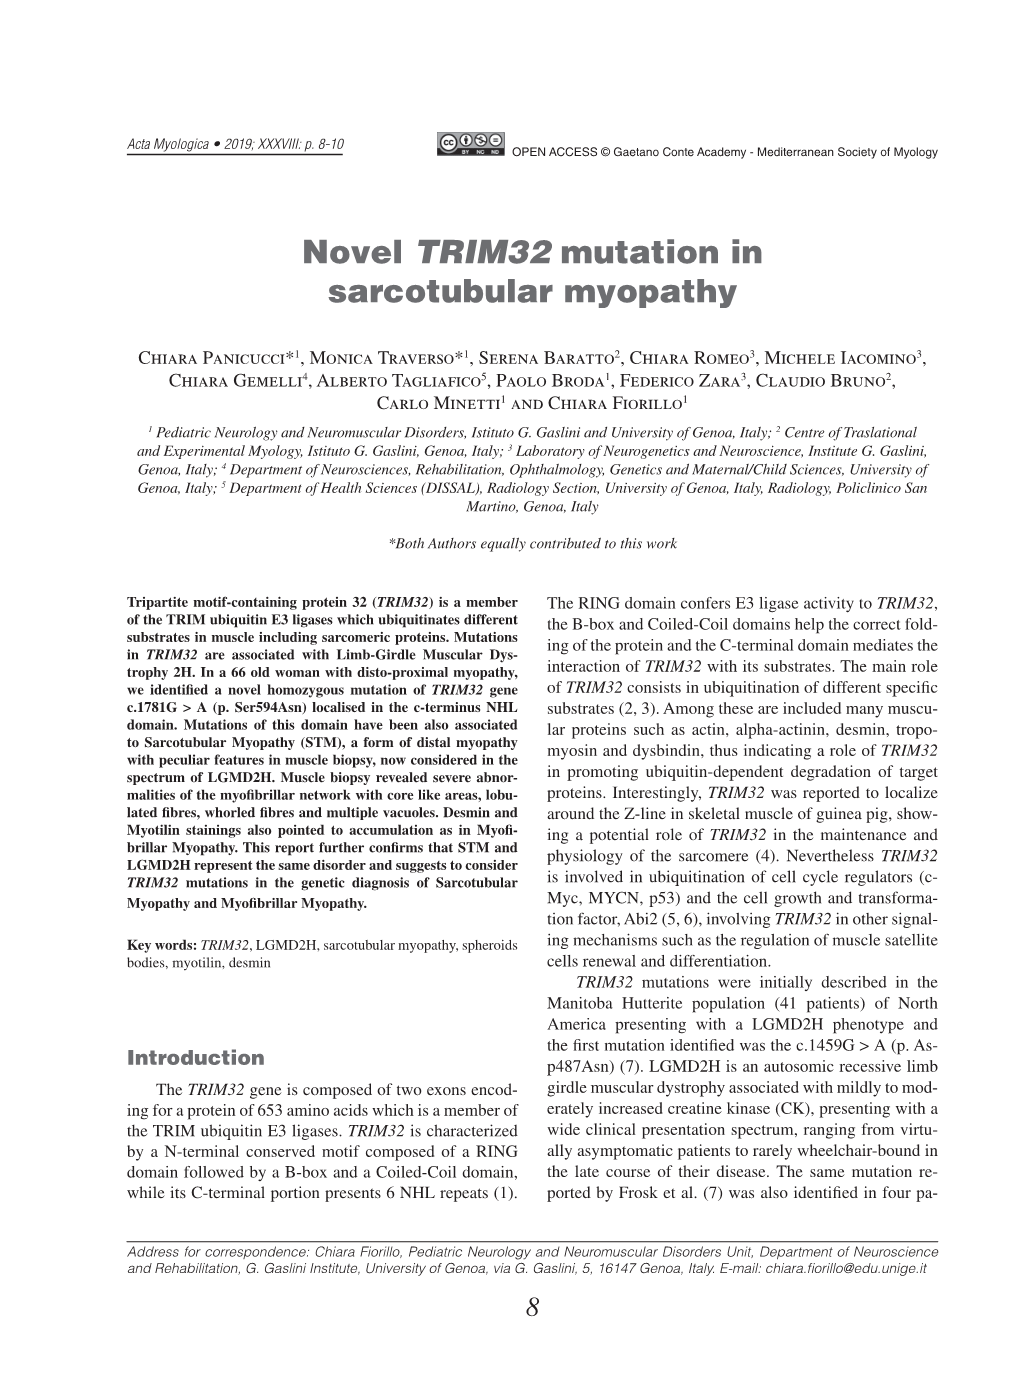 Novel TRIM32 Mutation in Sarcotubular Myopathy